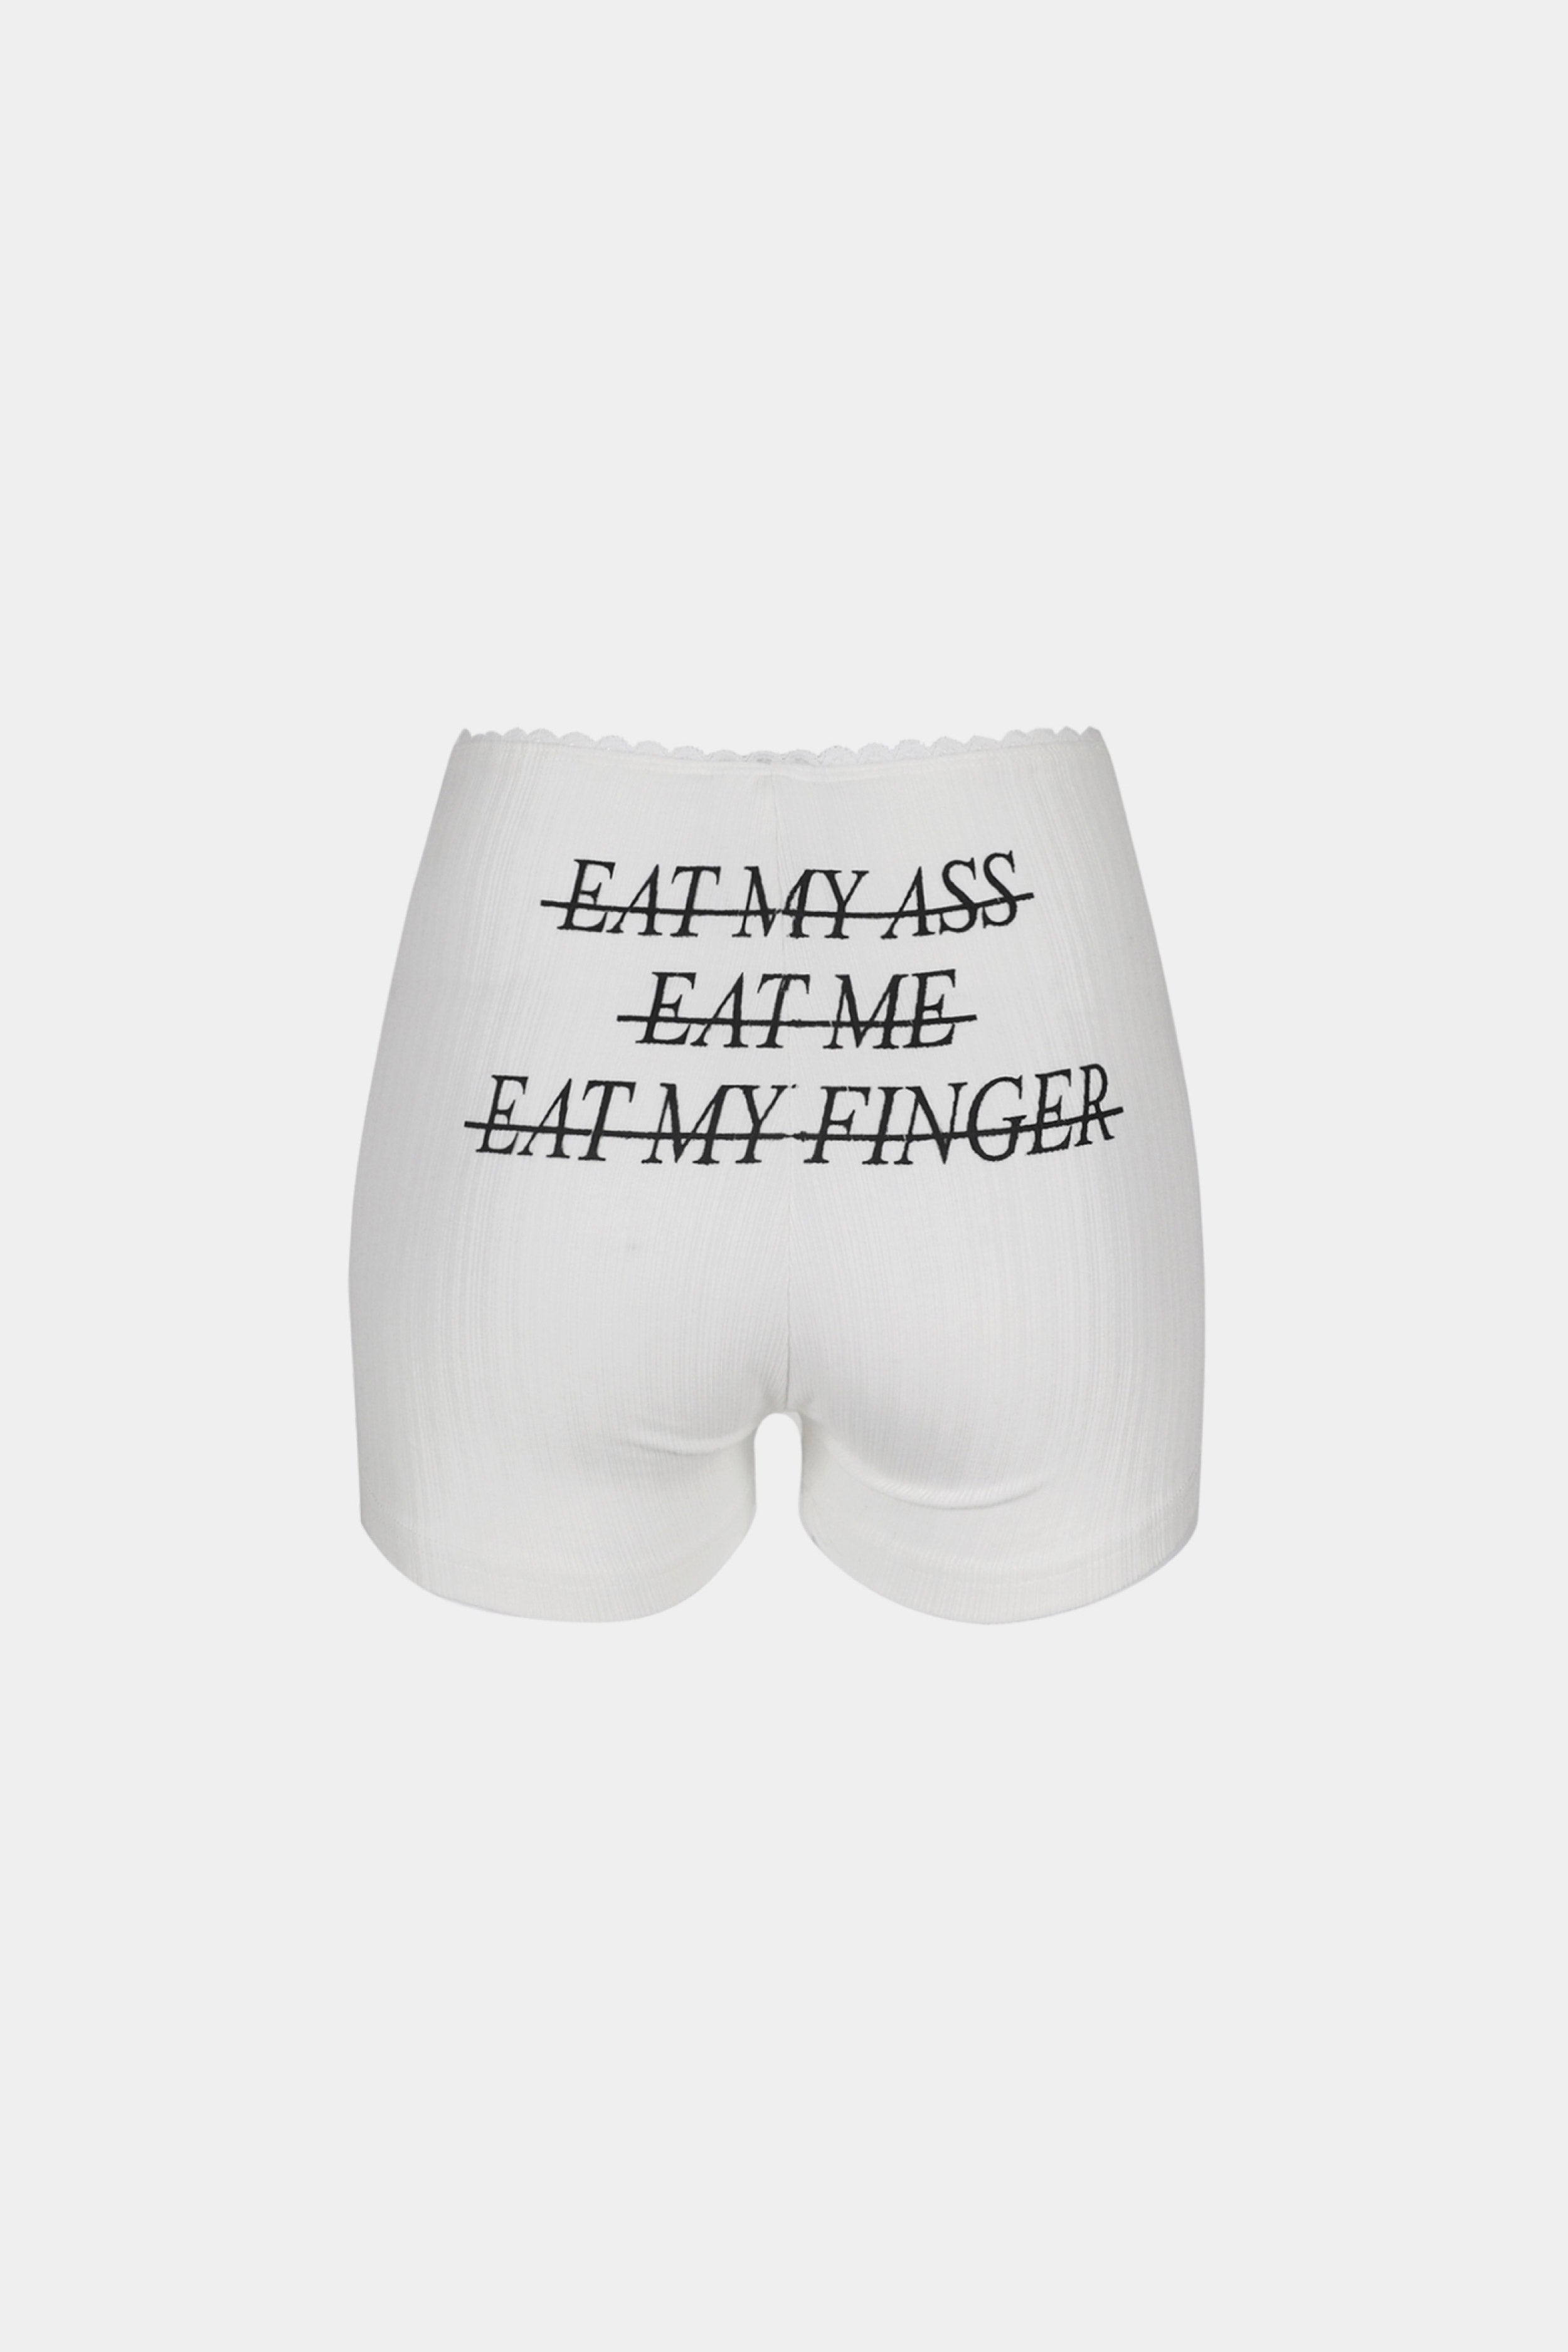 Badblood Eat Me Boxer (Shorts) White